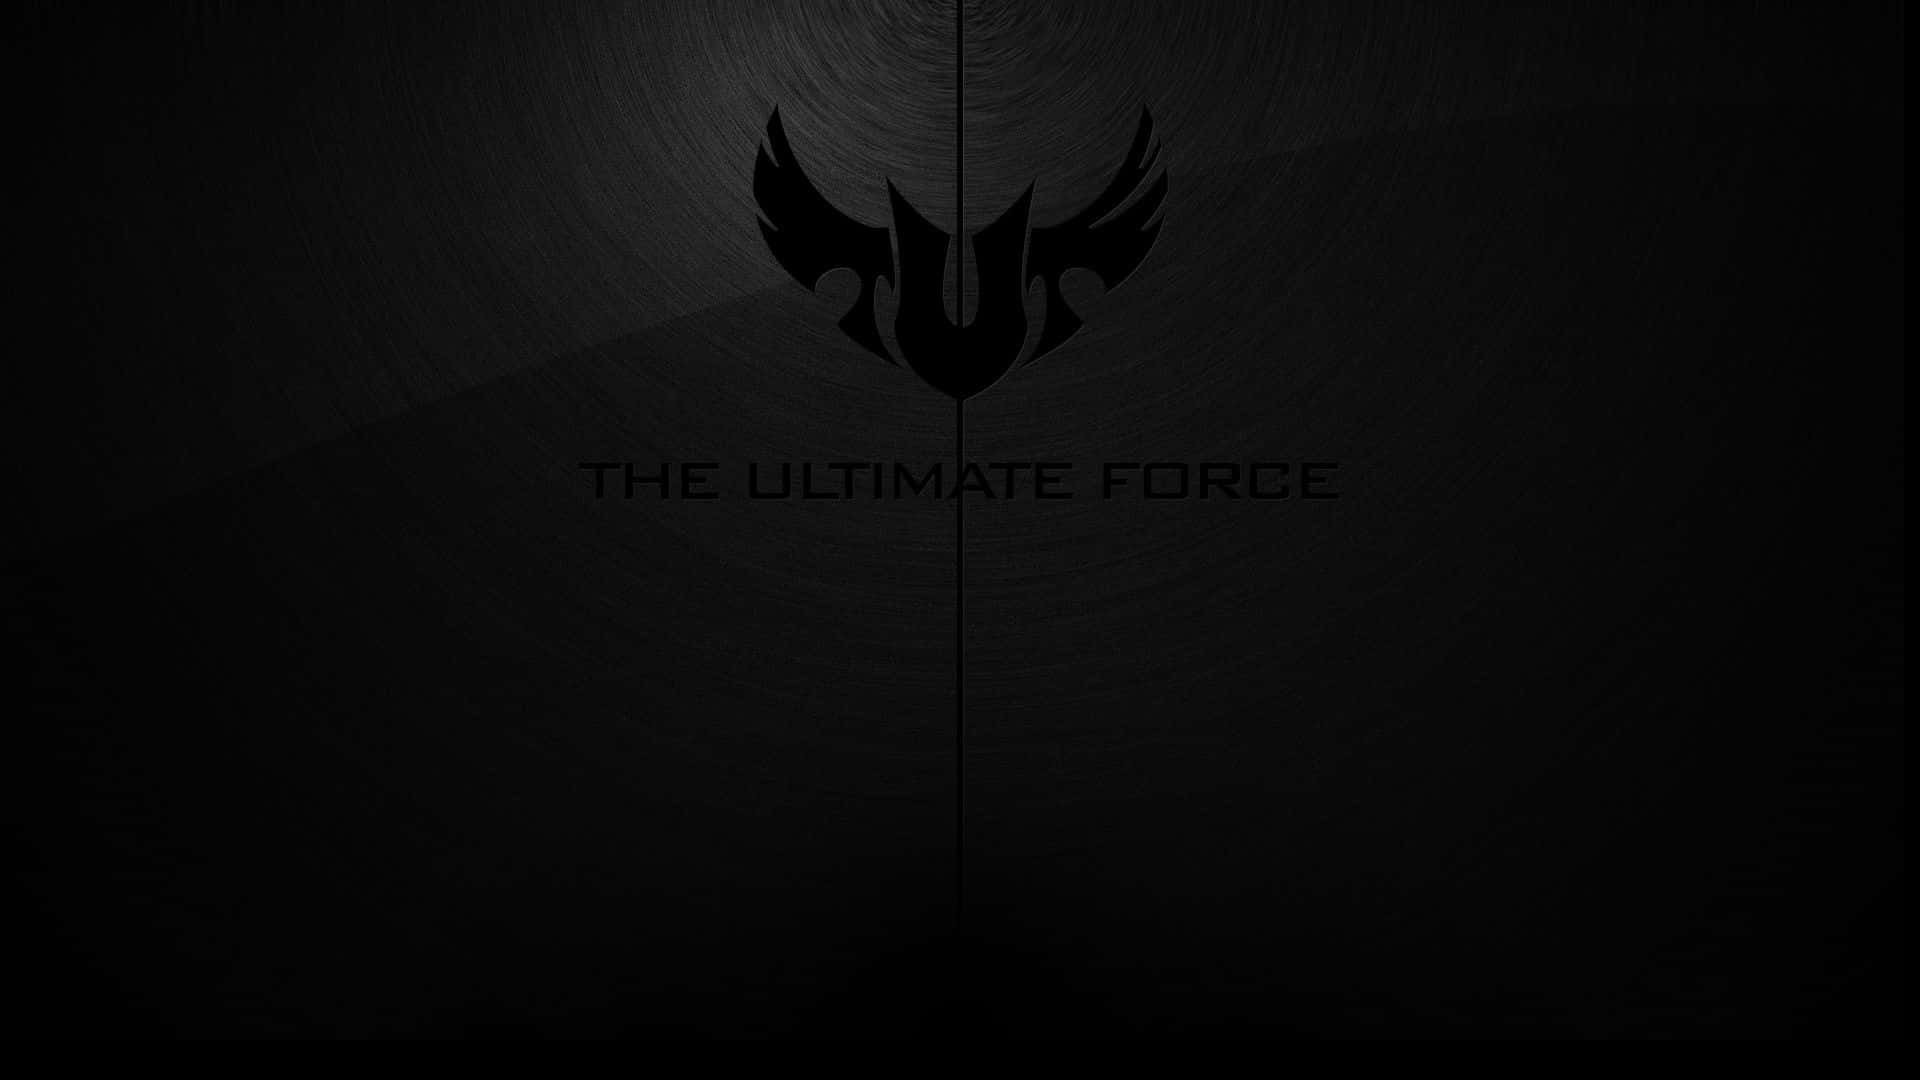 Asus T U F Ultimate Force Logo Wallpaper Background